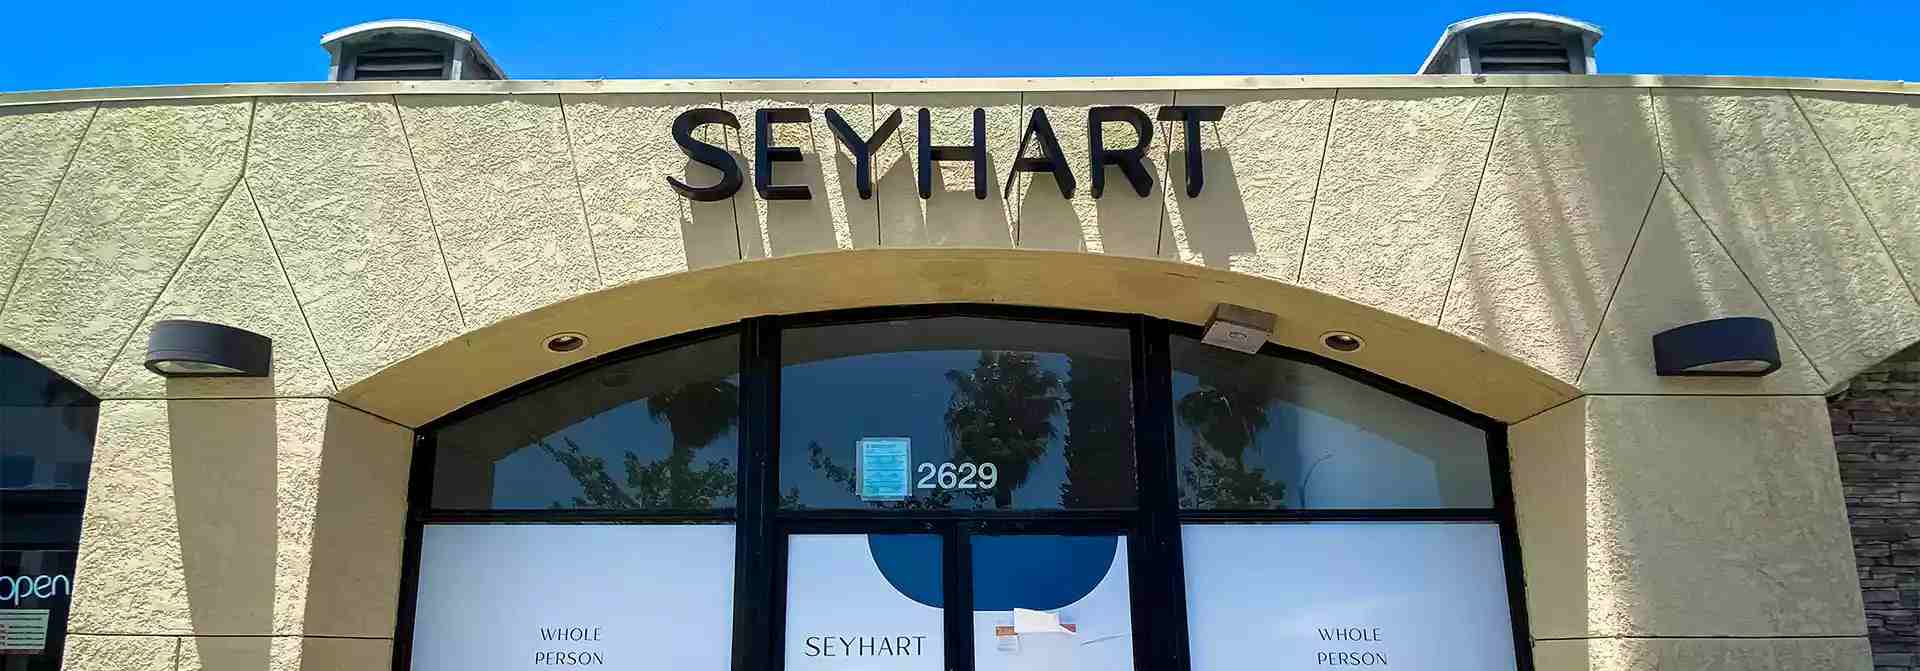 Seyhart exterior store branding solutions in black